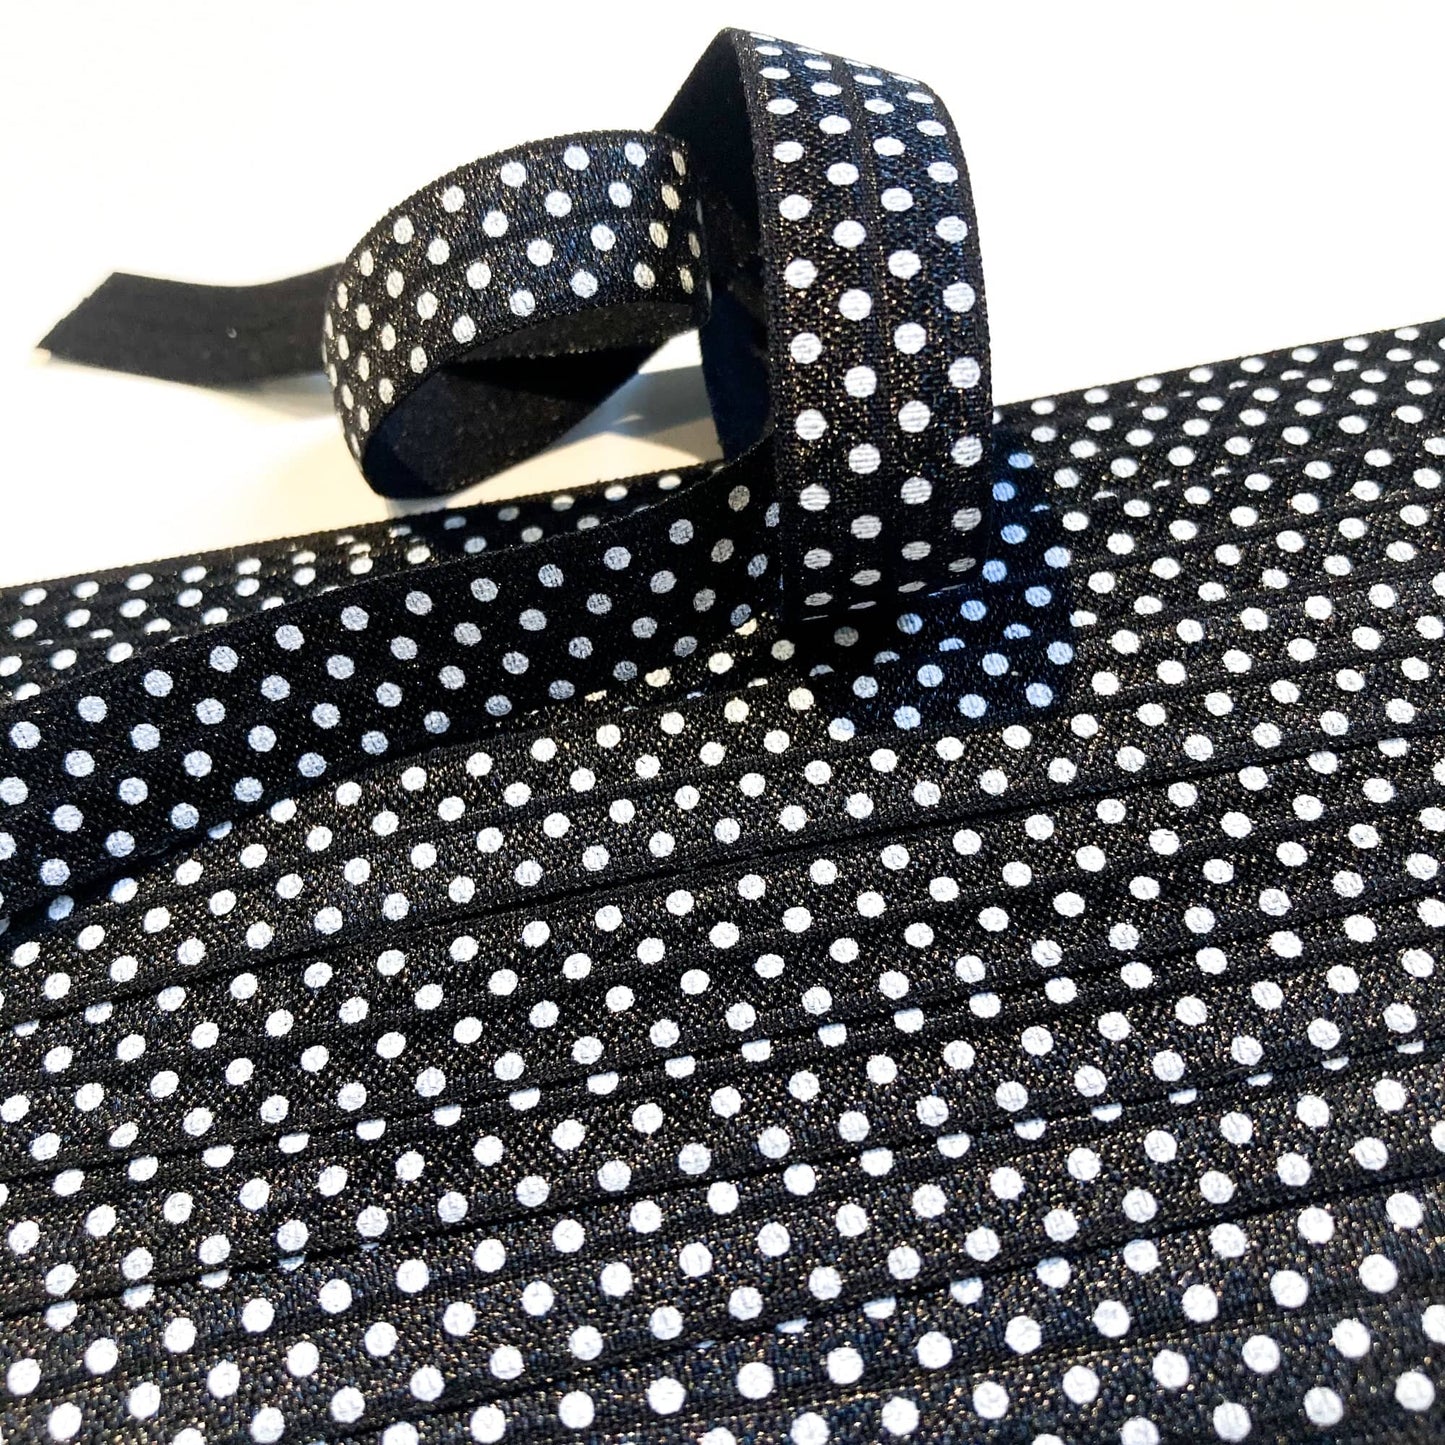 16 mm Foldover Elastic in Black with White Polka Dots